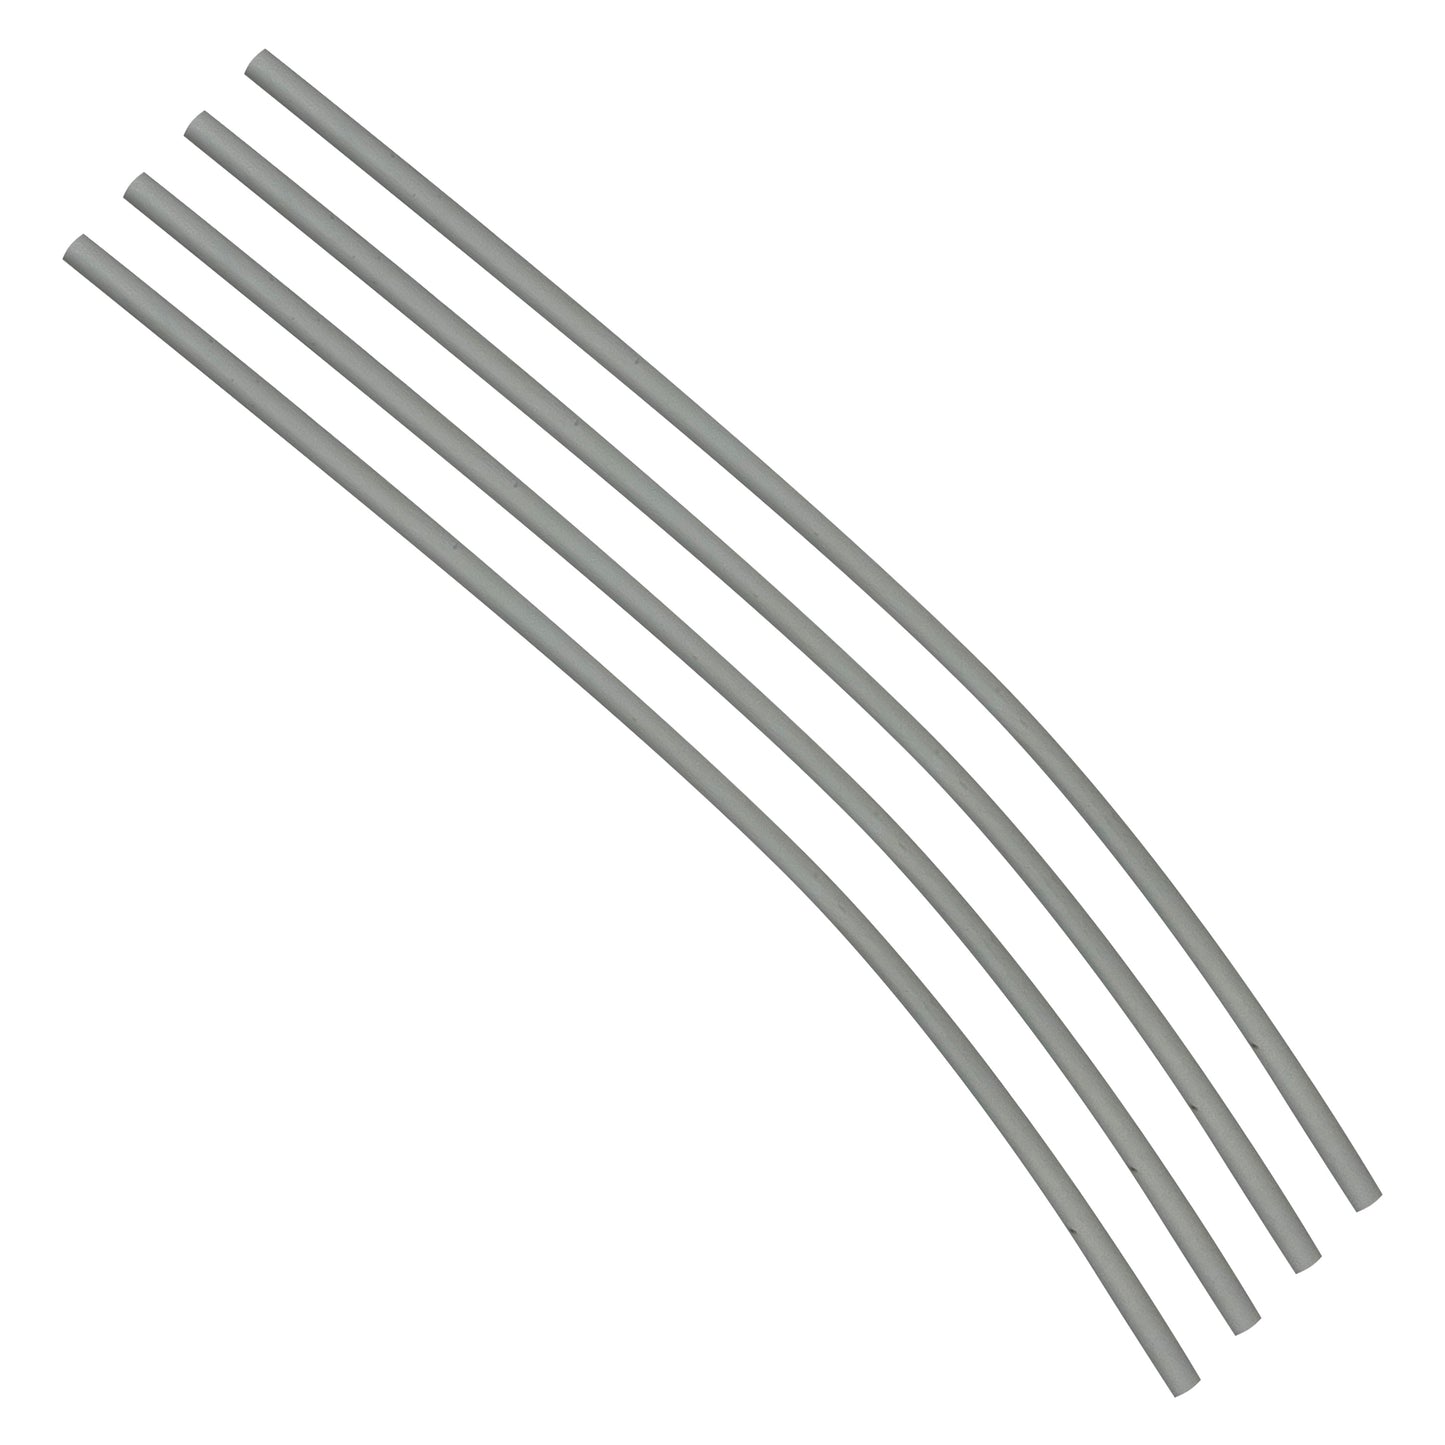 Flexible Thin Single Wall Non-Adhesive Heat Shrink Tubing 2:1 White 3/32" ID - 25' Ft Spool